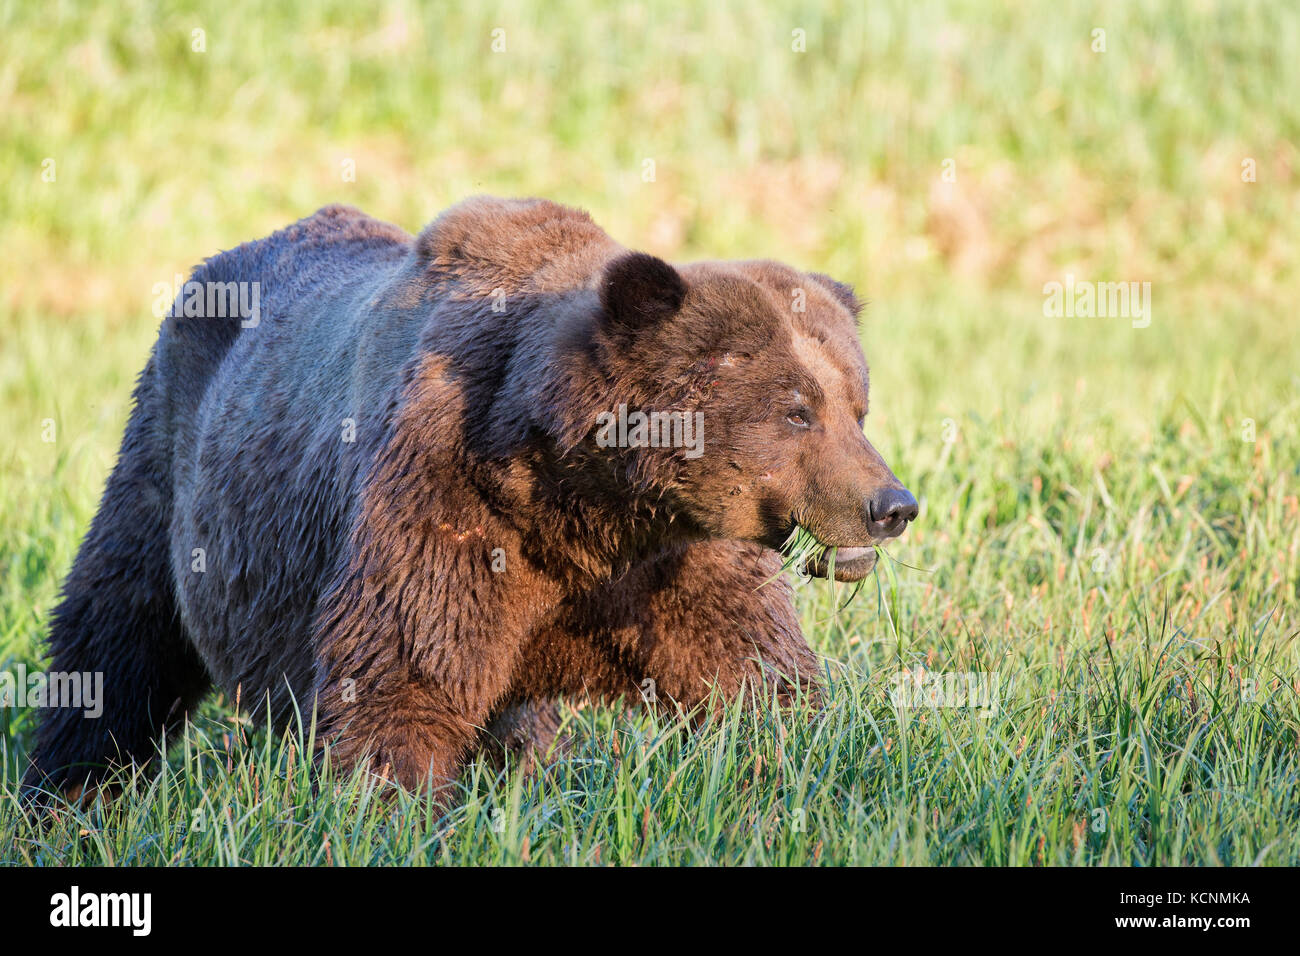 Orso grizzly (Ursus arctos horriblis), grande graffiato maschio, mangiare lyngbye's sedge (Carex lyngbye), kwinimass estuario, British Columbia, Canada. Foto Stock